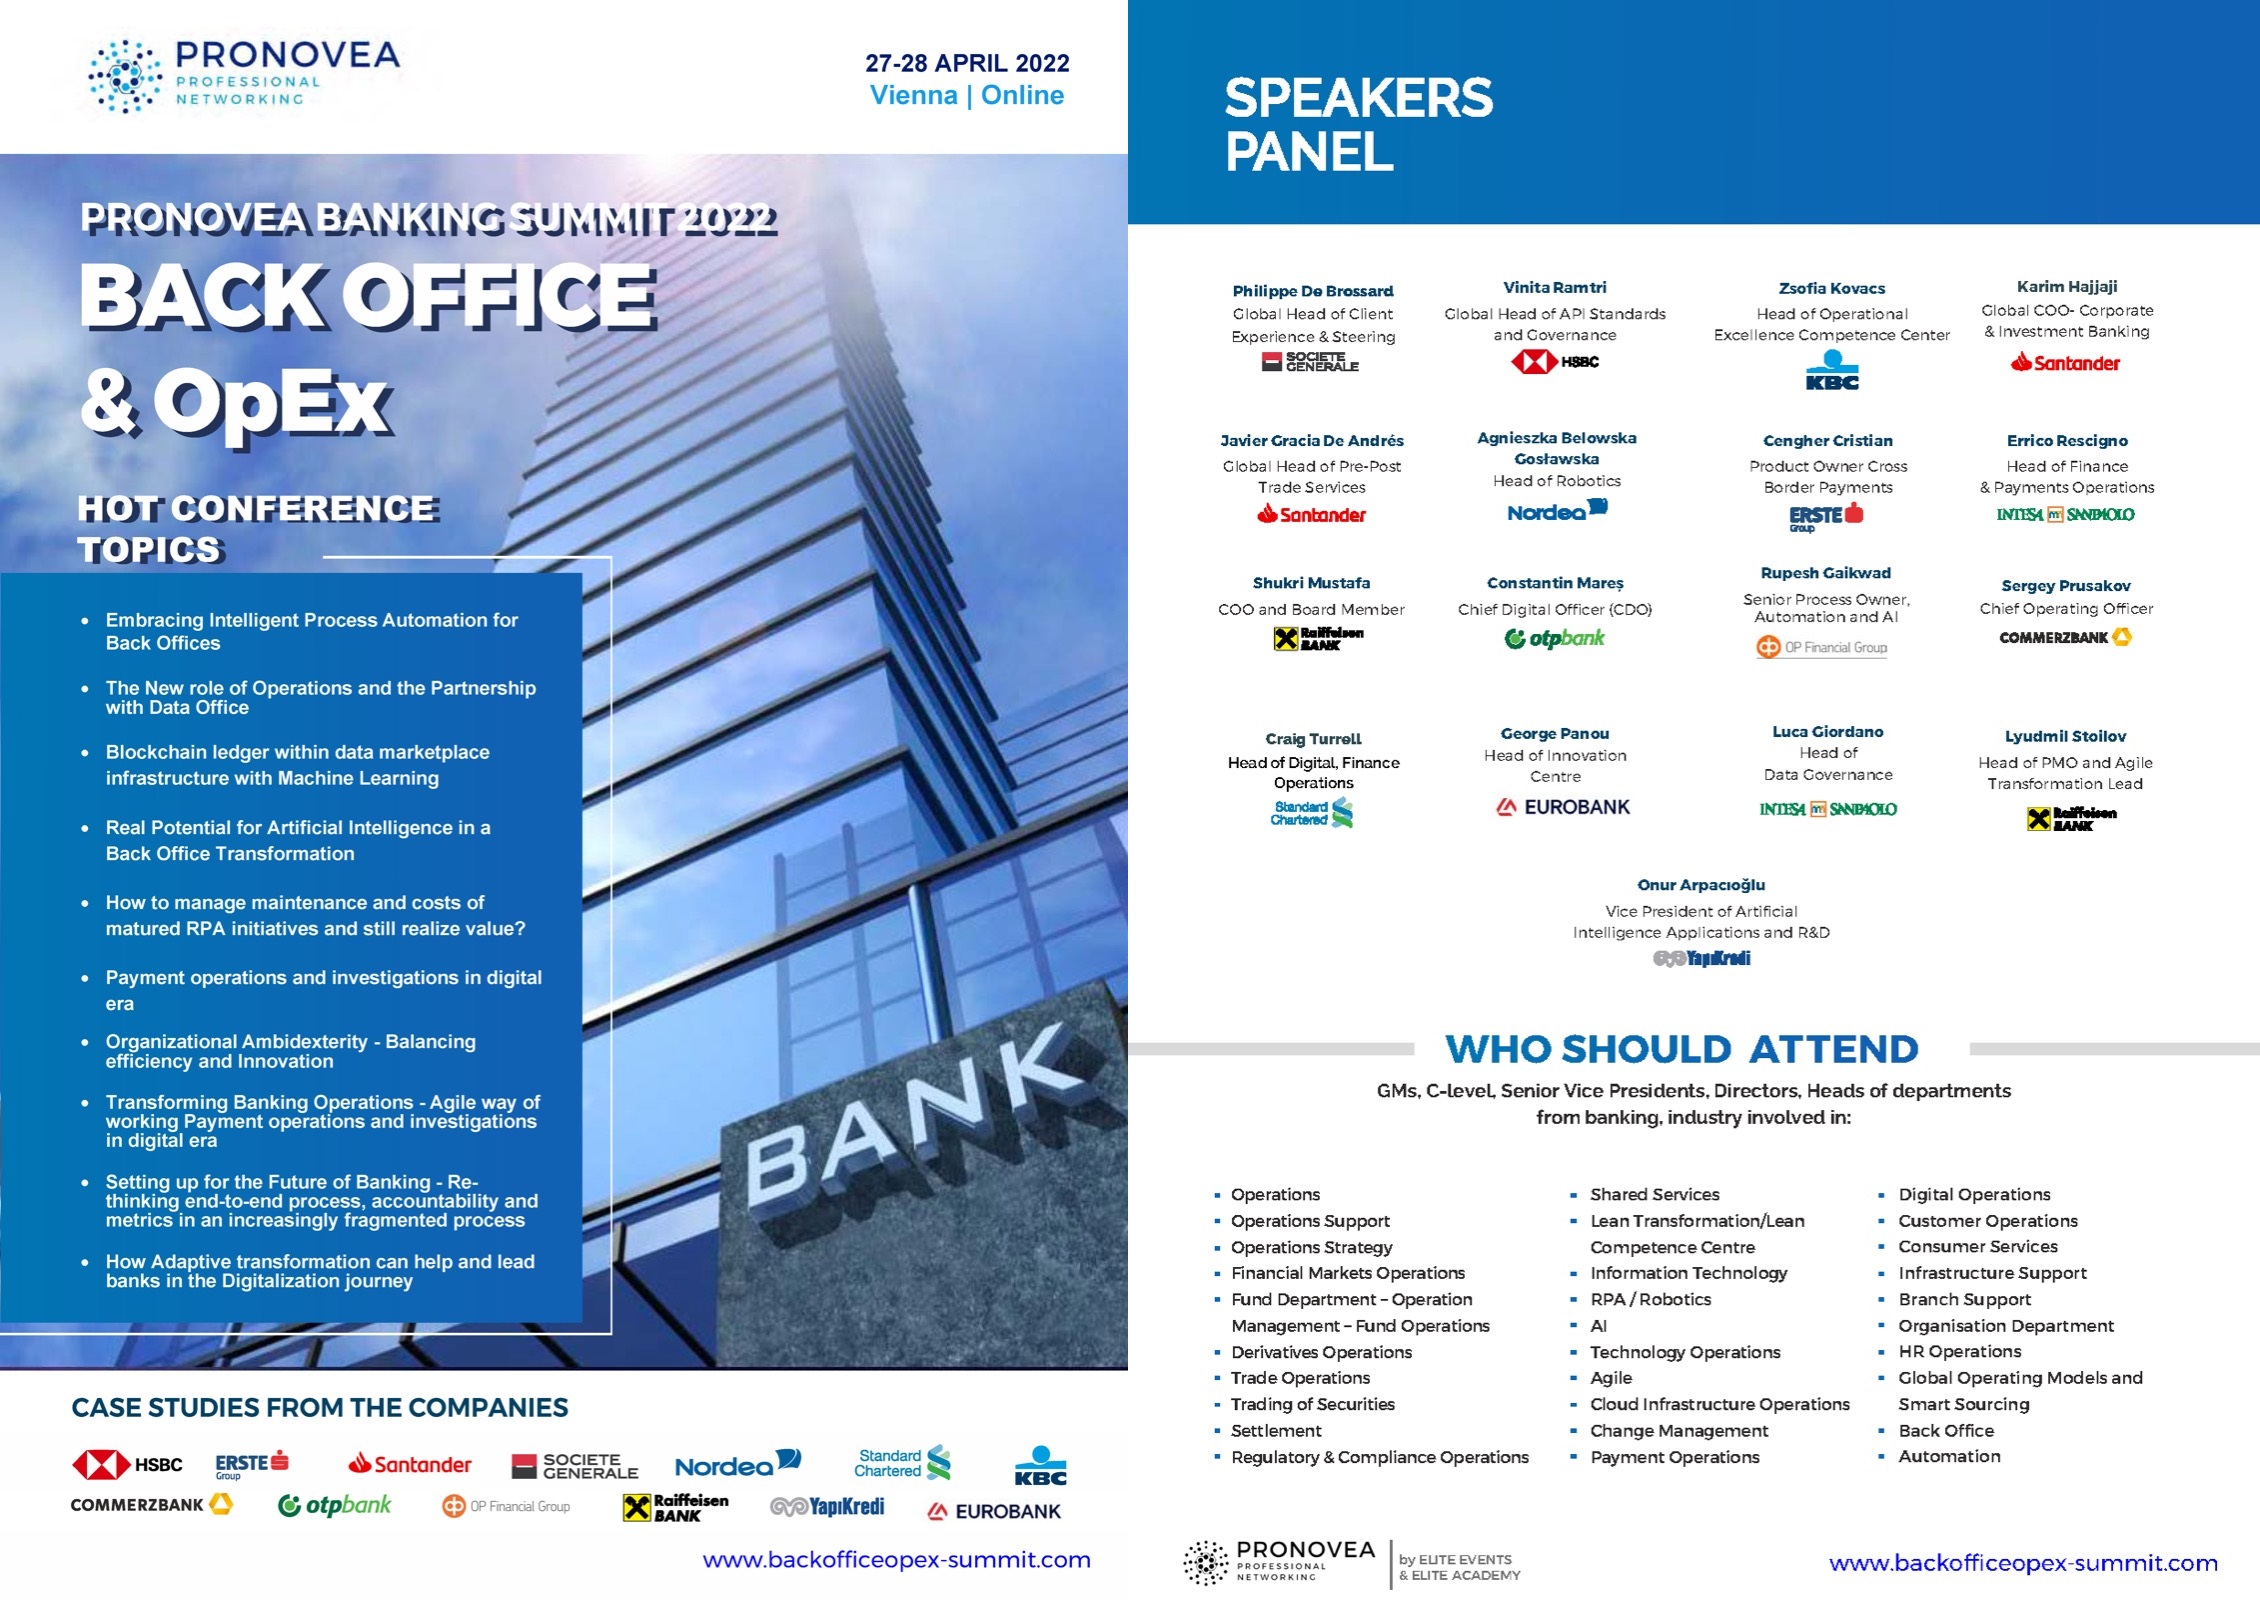 Pronovea Banking Summit 2022: Back Office & OpEx agenda page